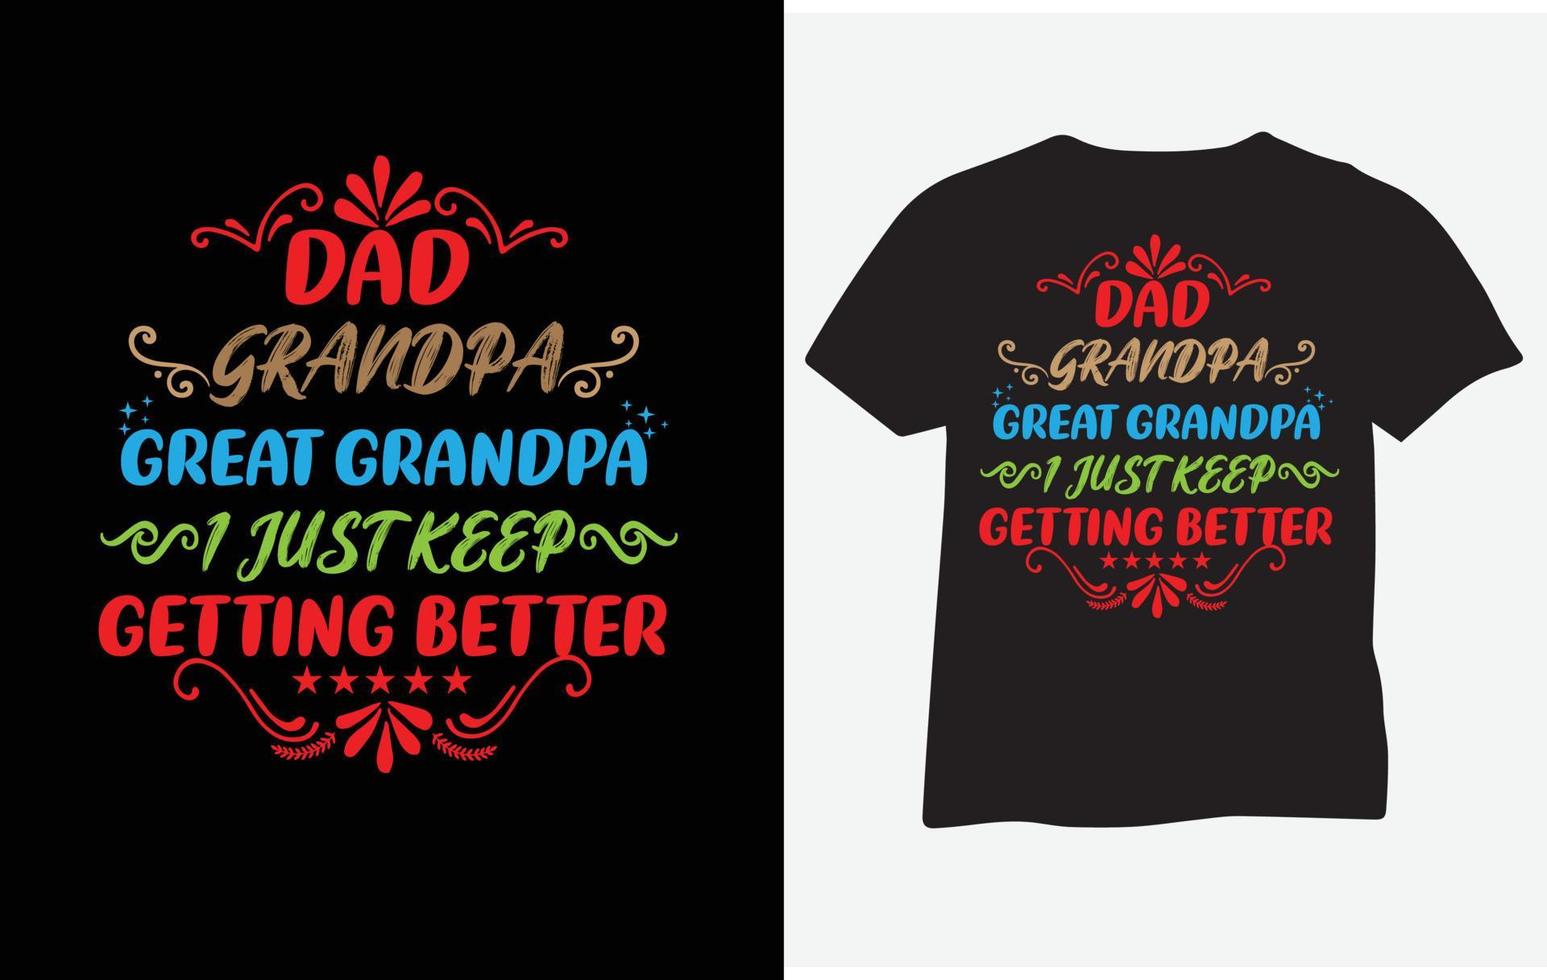 Dad grandpa great grandpa i just keep getting better t shirt design vector